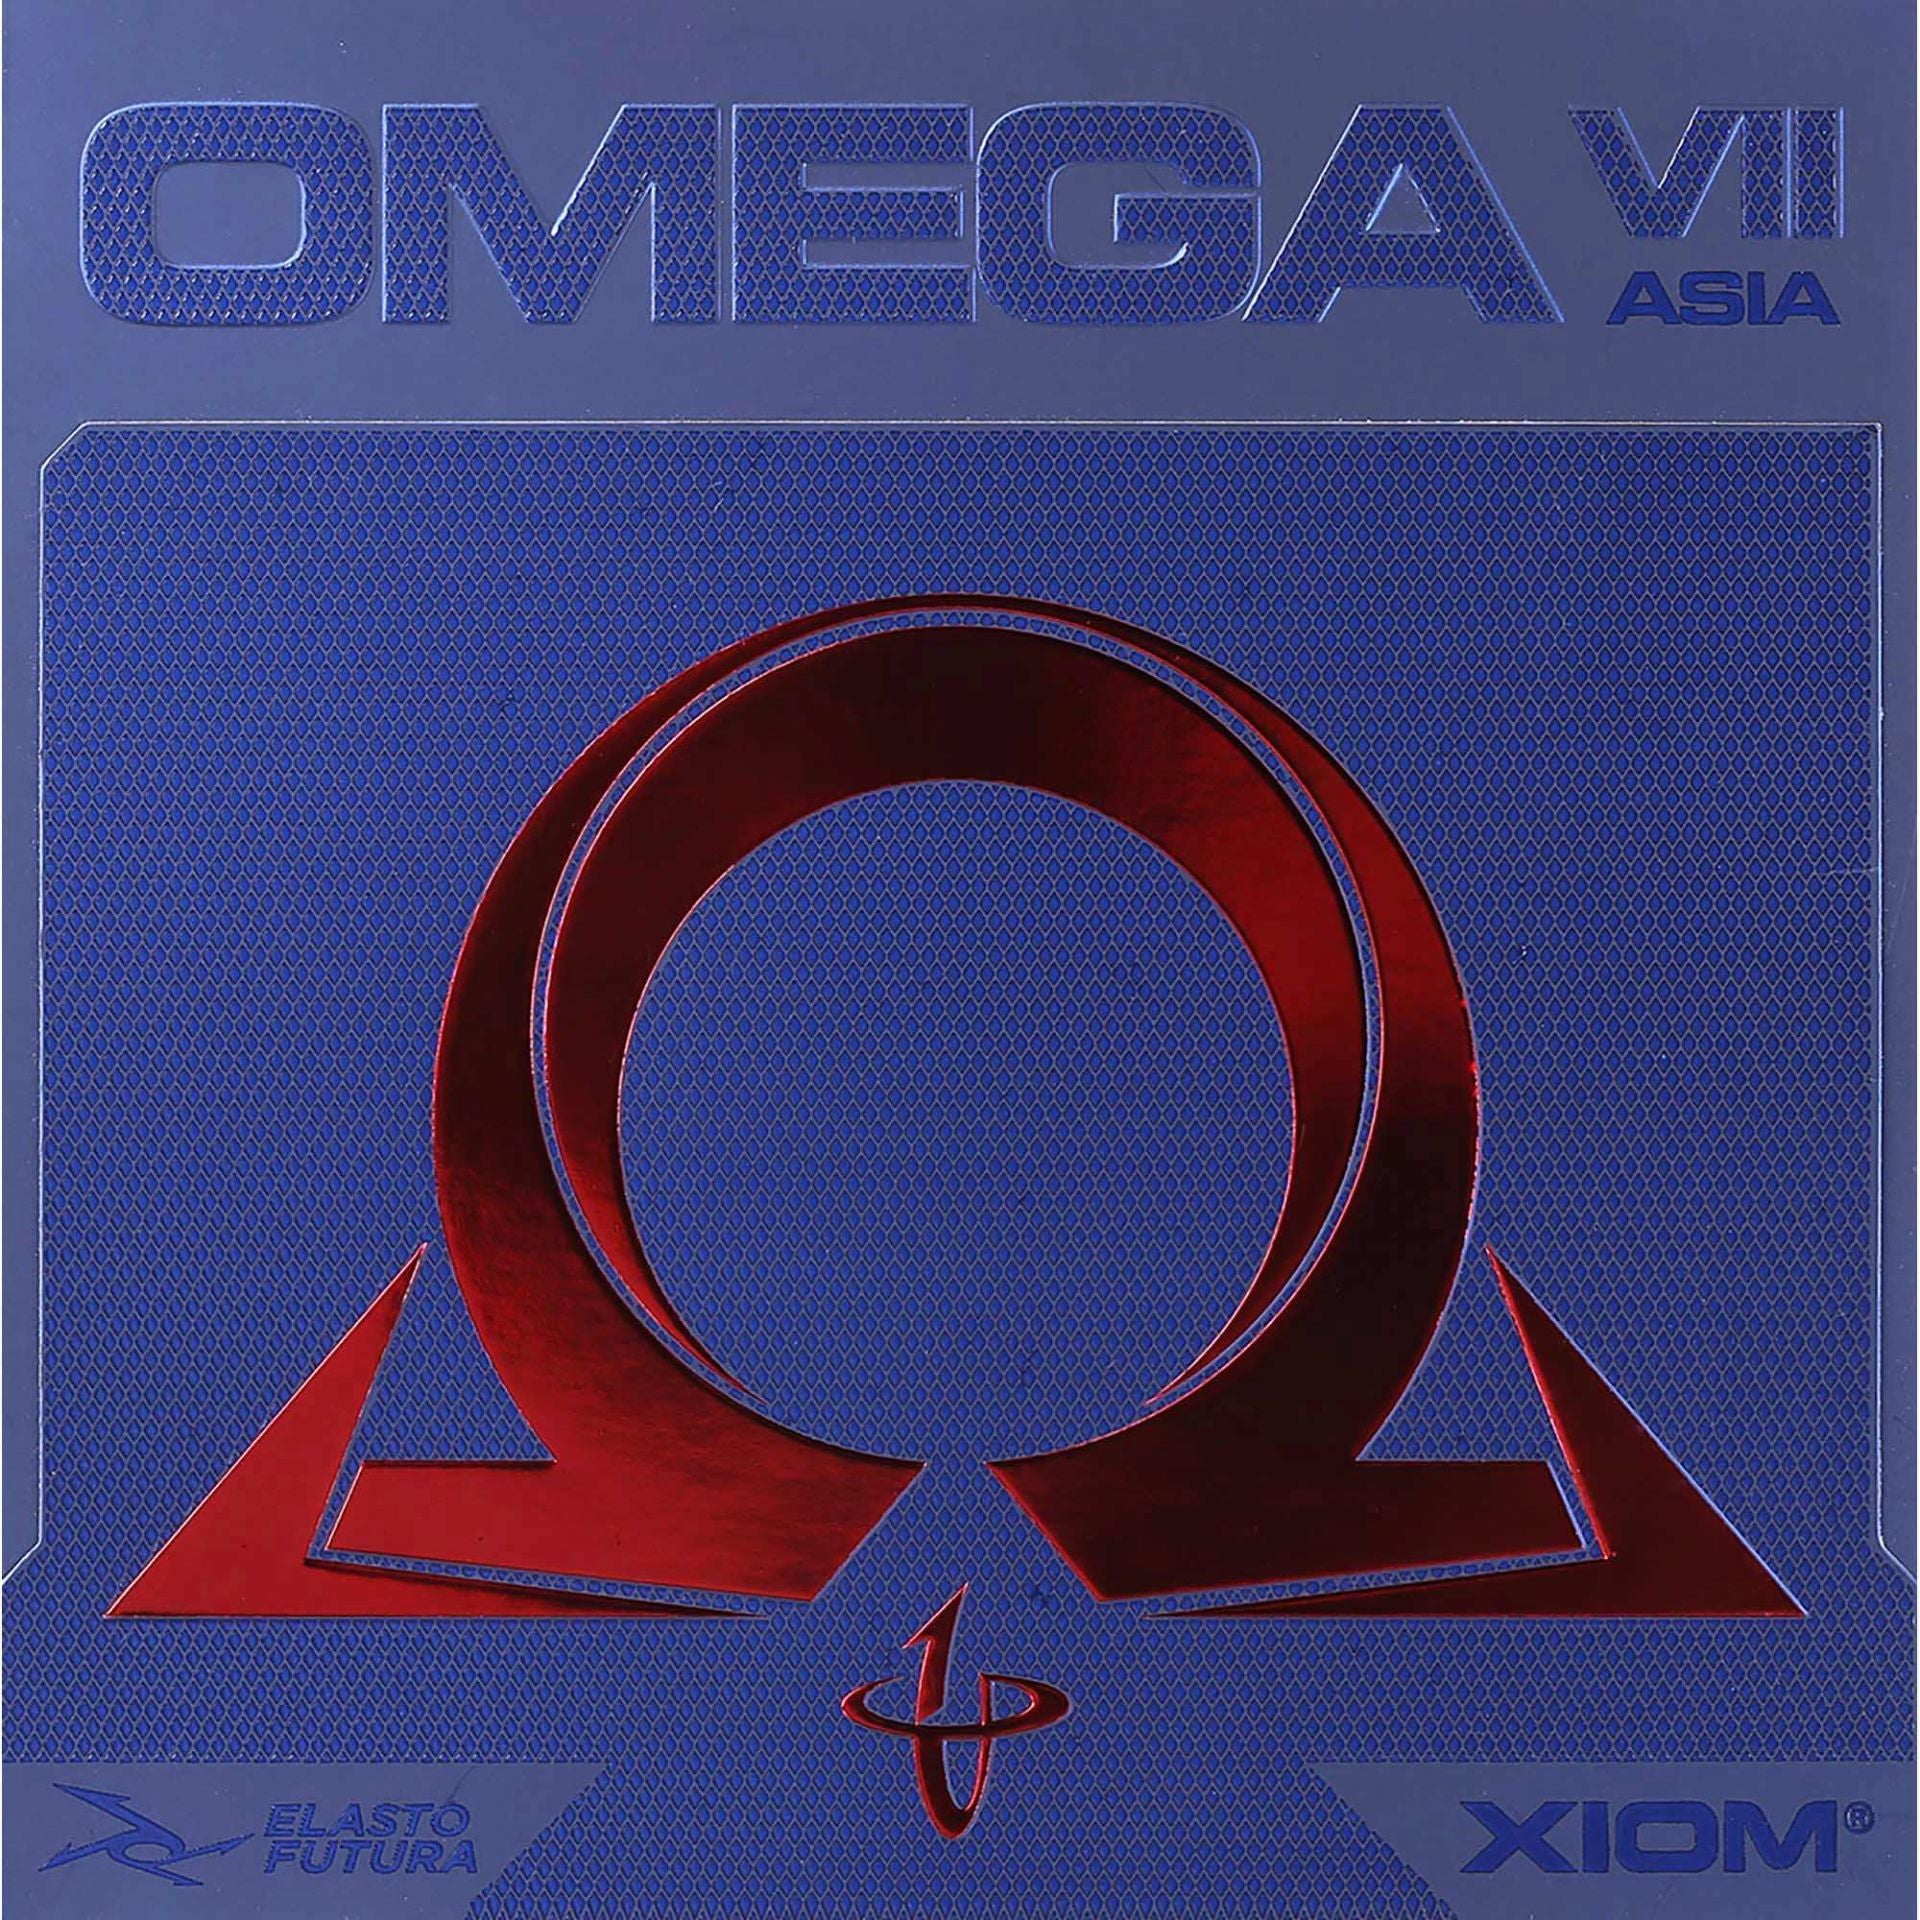 XIOM Omega VII Asia - Table Tennis Rubber